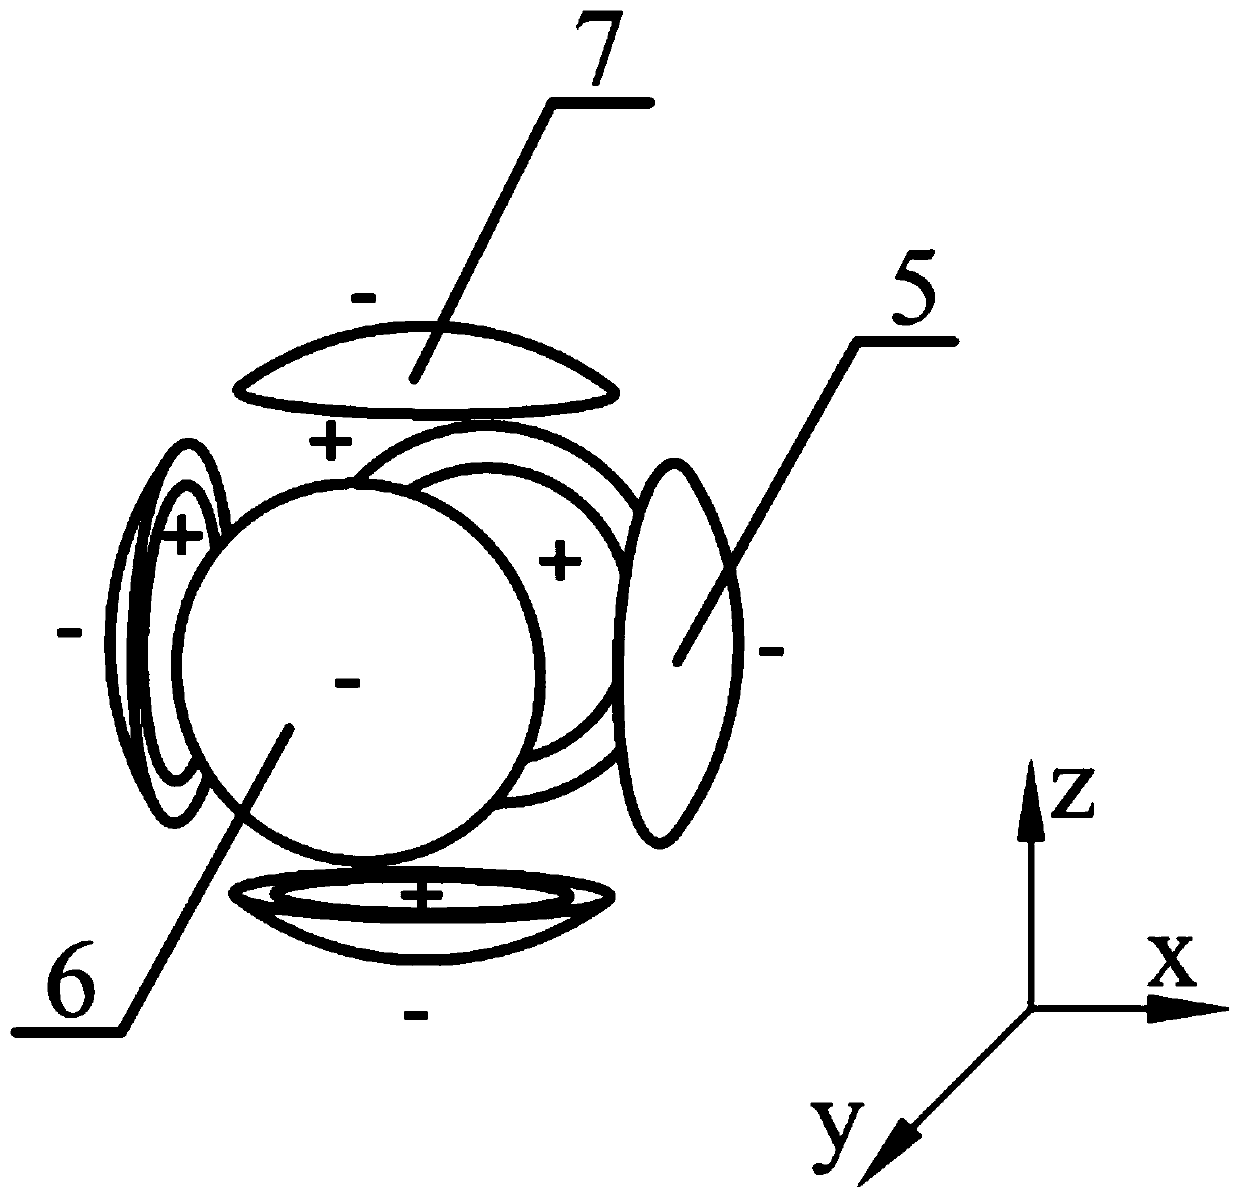 Three-degree-of-freedom spherical stator ultrasonic motor stator base and its excitation method